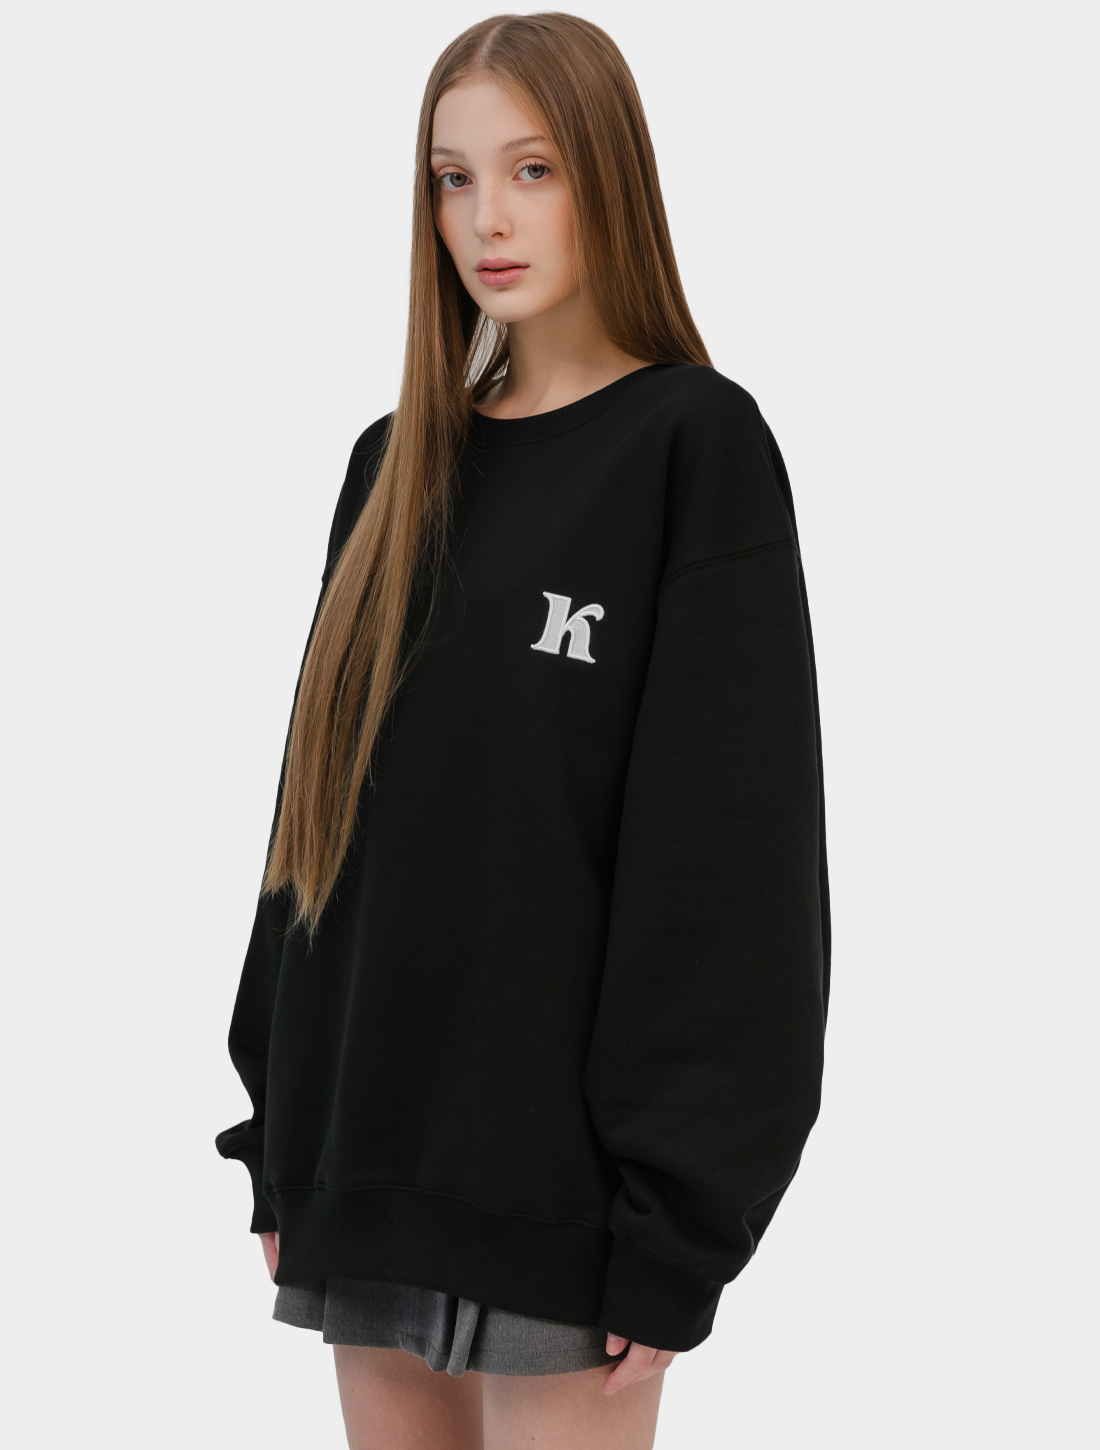 Odd Oversized Sweatshirt (black)